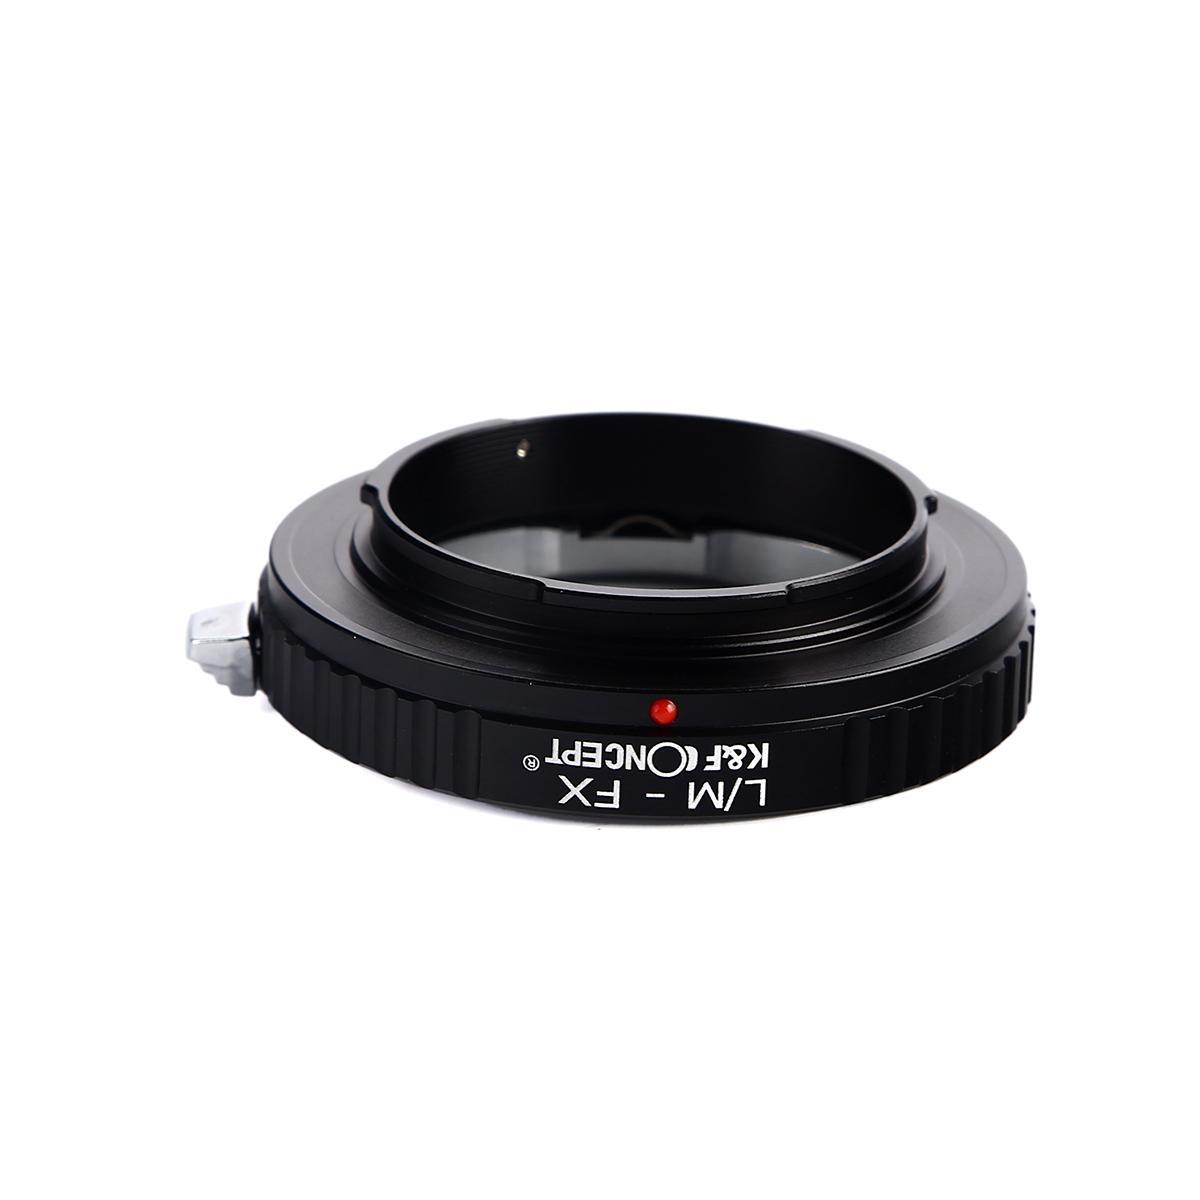 K&F Concept KF06.100 Lens Adapter Mount For LM-FX 